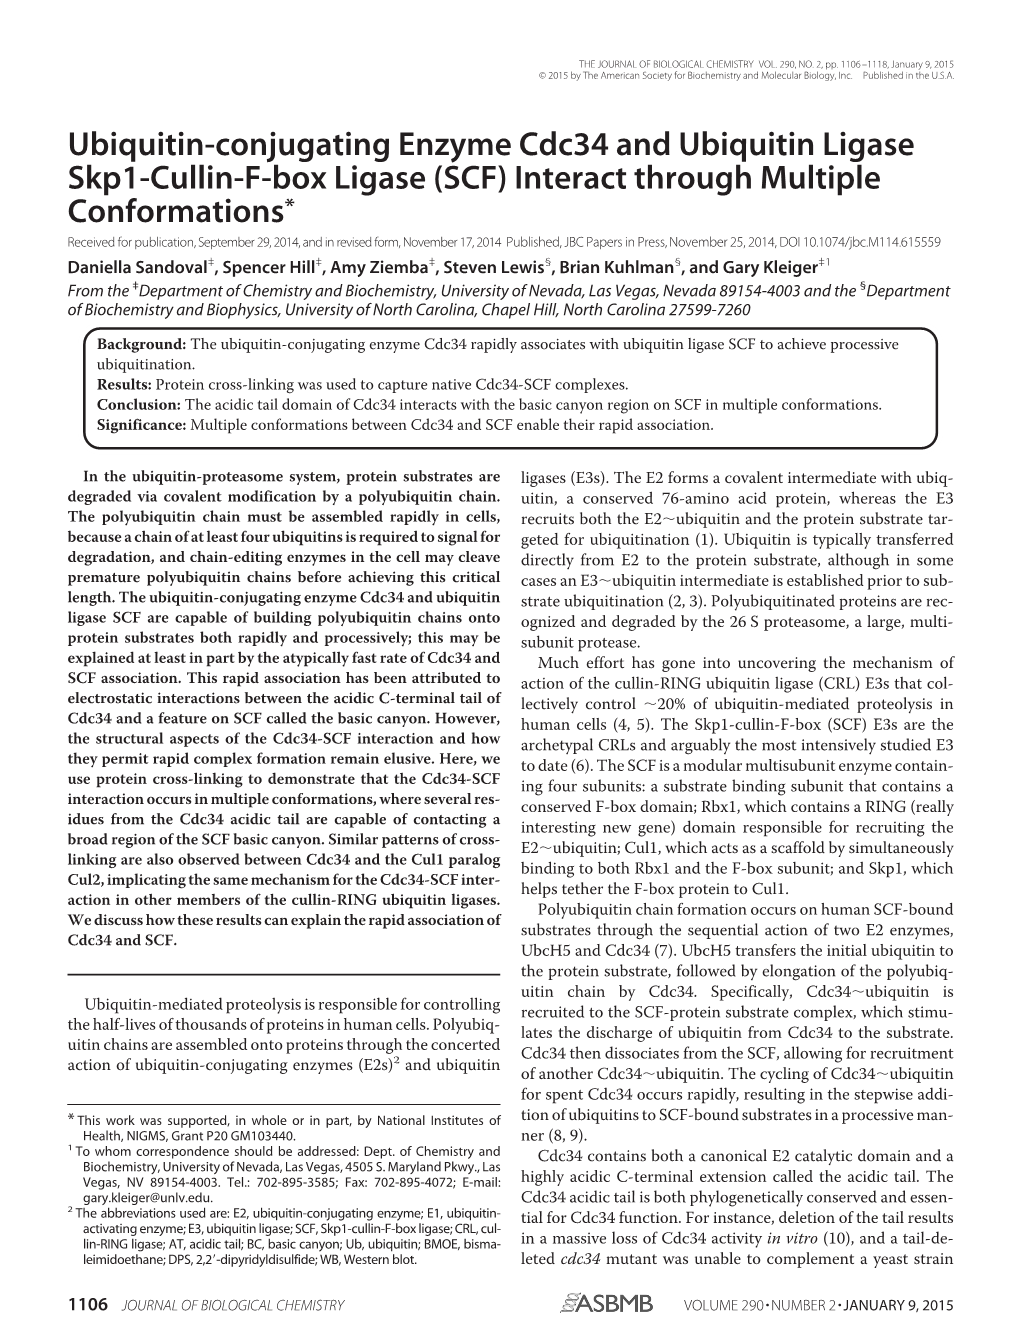 Ubiquitin-Conjugating Enzyme Cdc34 and Ubiquitin Ligase Skp1-Cullin-F